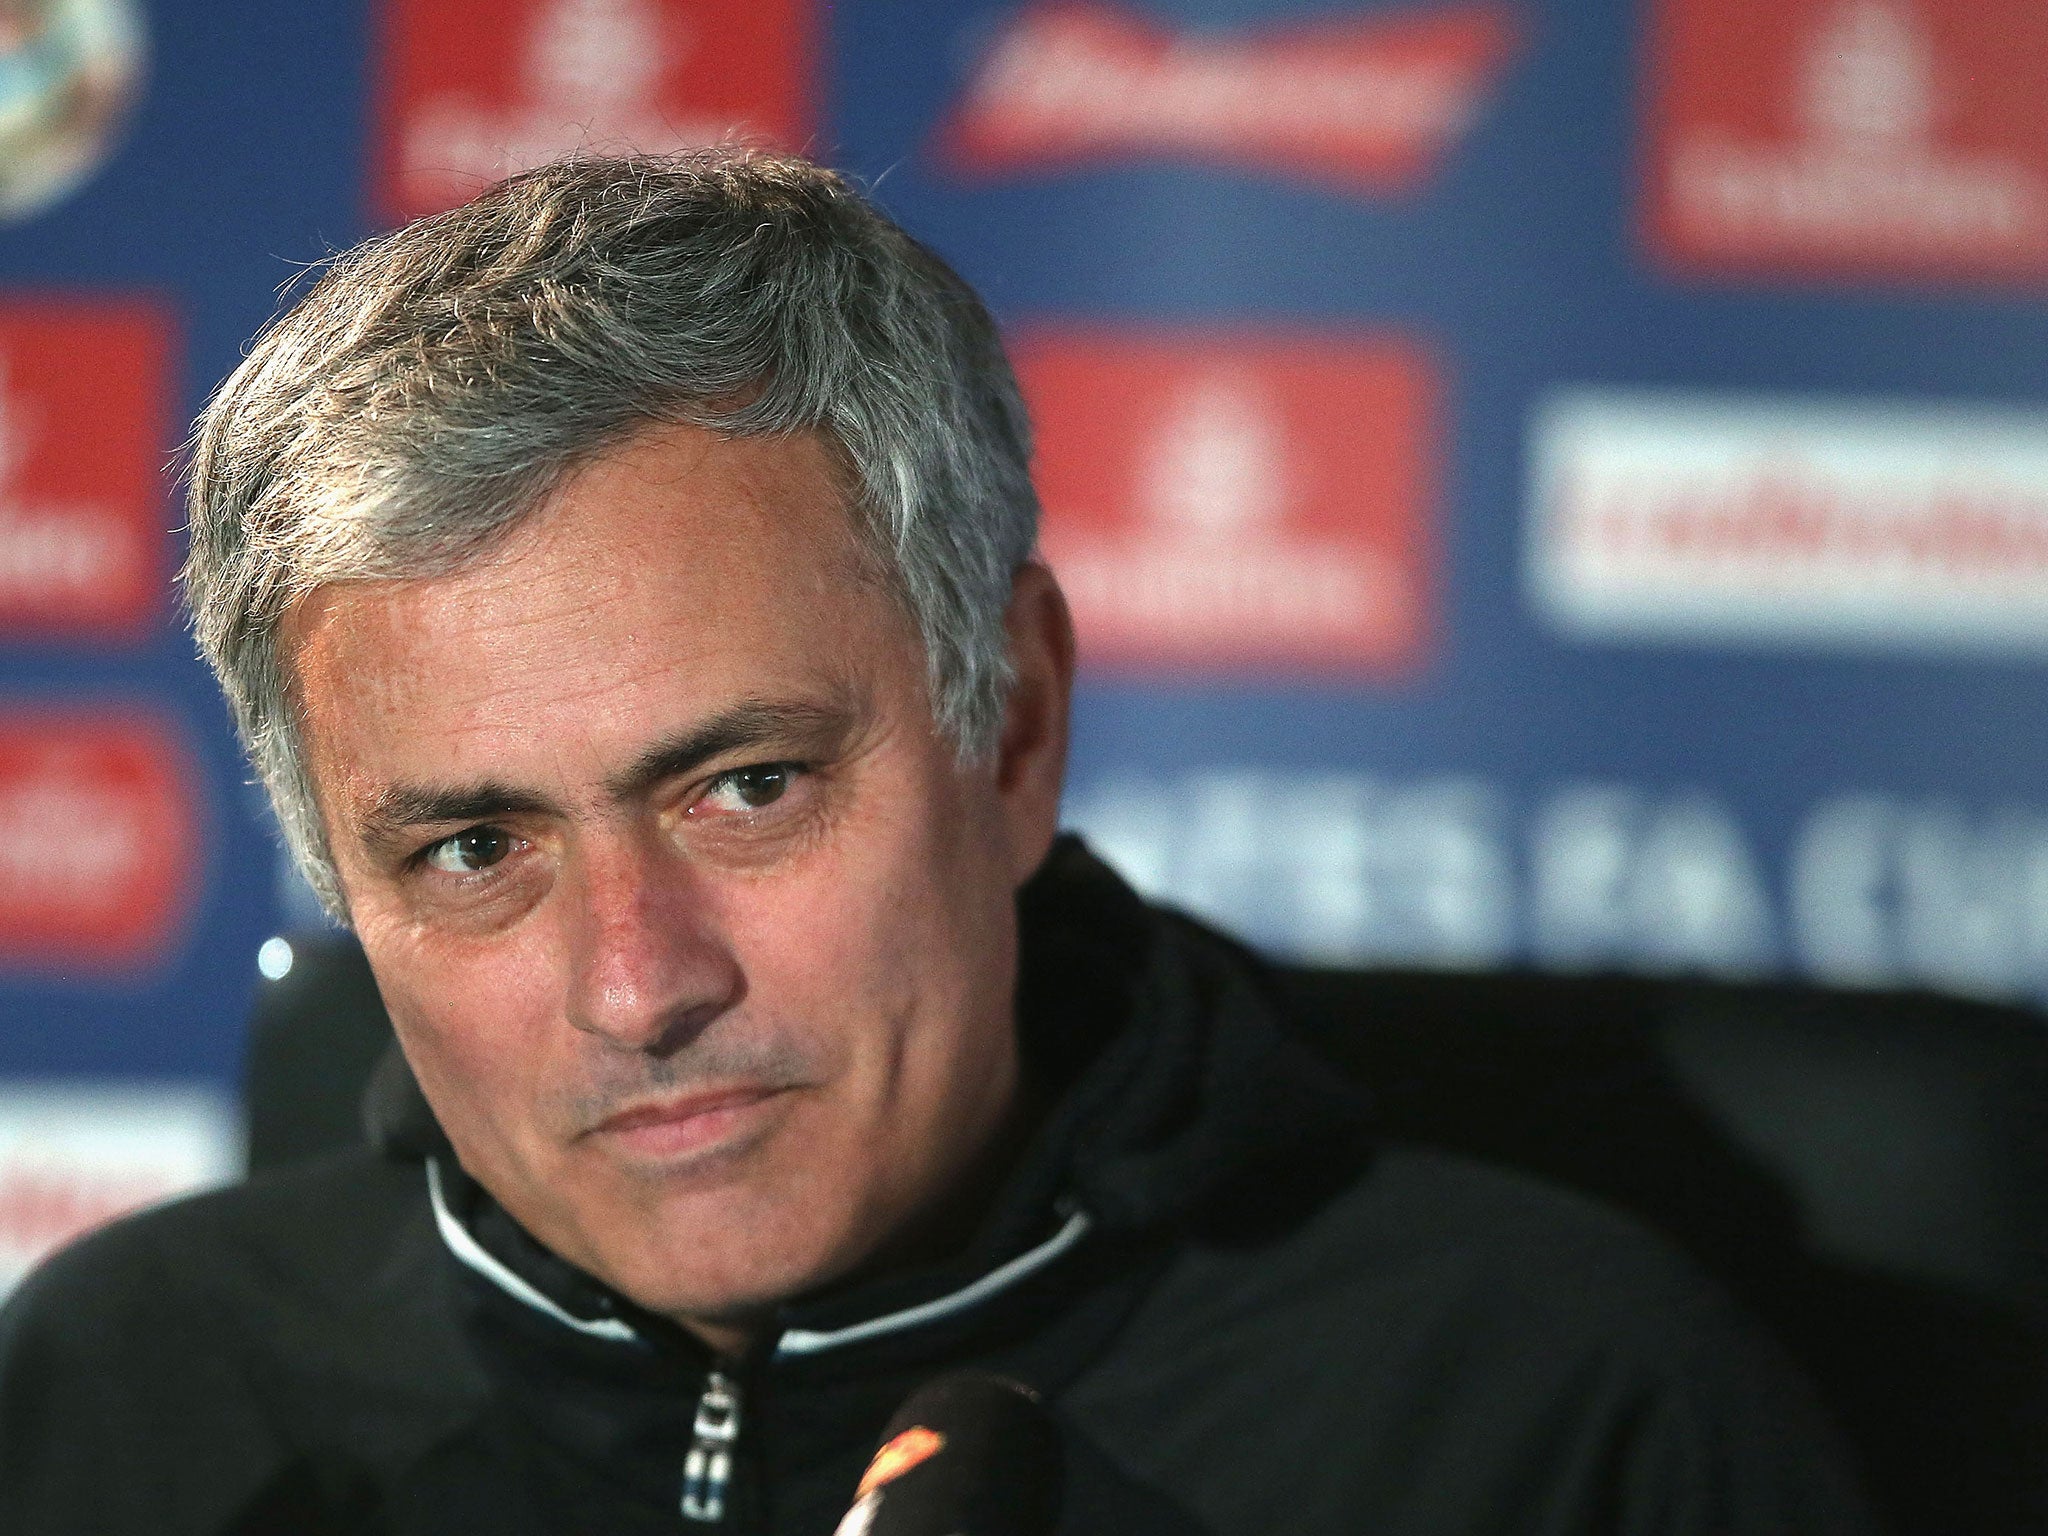 Mourinho has sought to downplay rumours linking him with Southampton's Jose Fonte